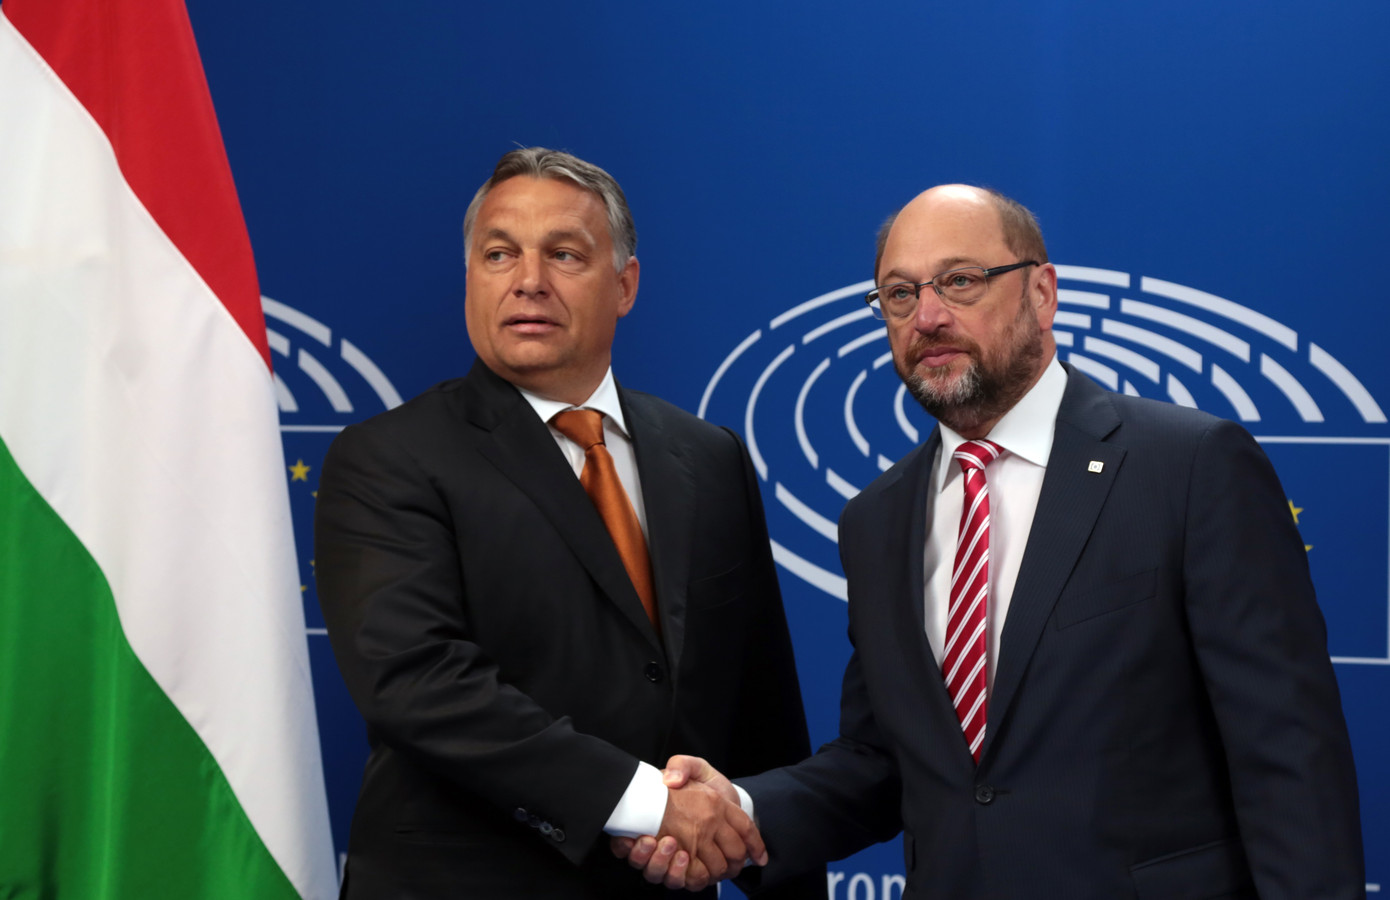 Hongaars premier Viktor Orban (links) met Europees Parlementsvoorzitter Martin Schulz.